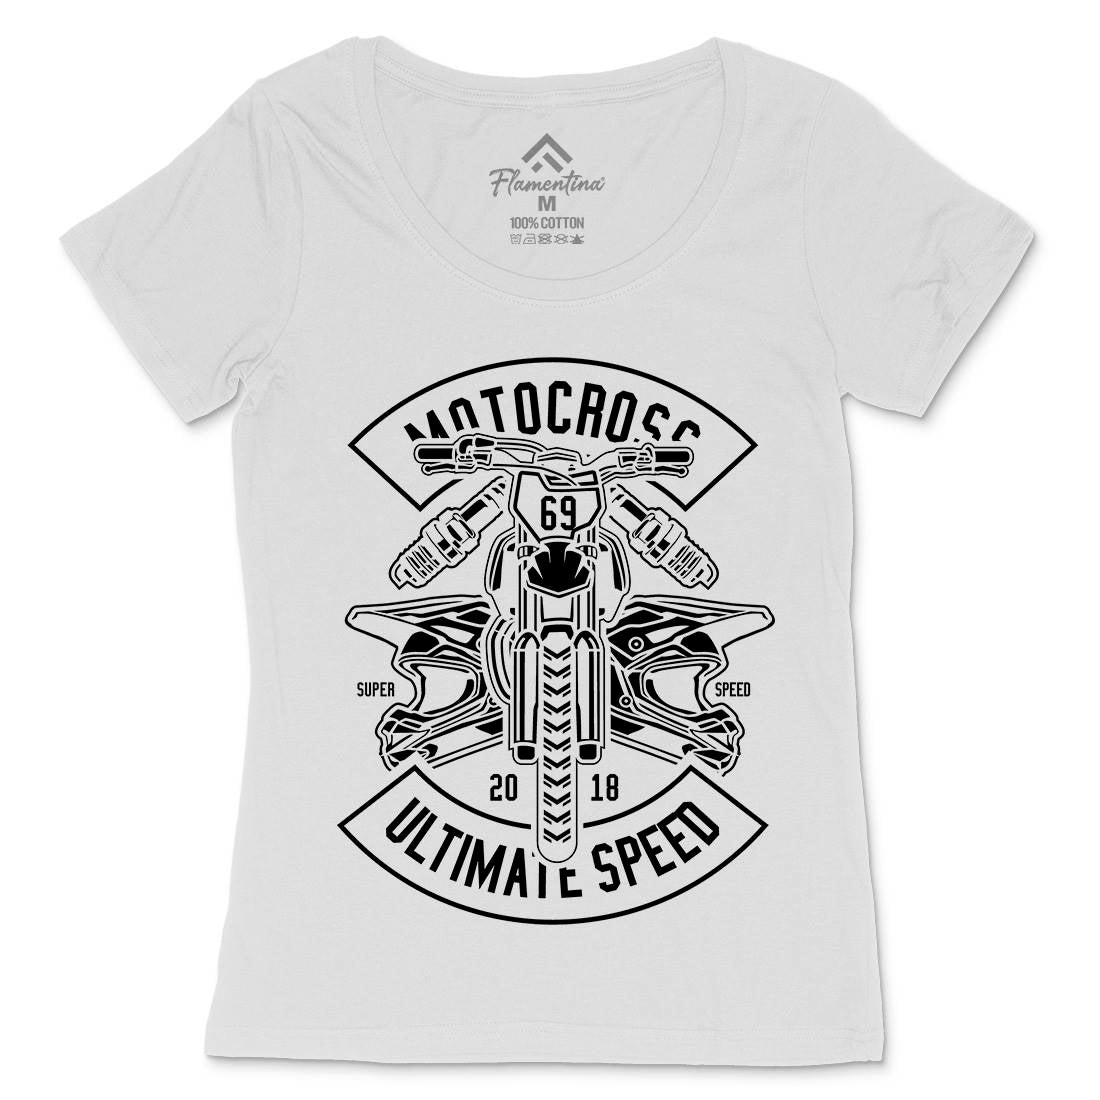 Motocross Ultimate Speed Womens Scoop Neck T-Shirt Motorcycles B579